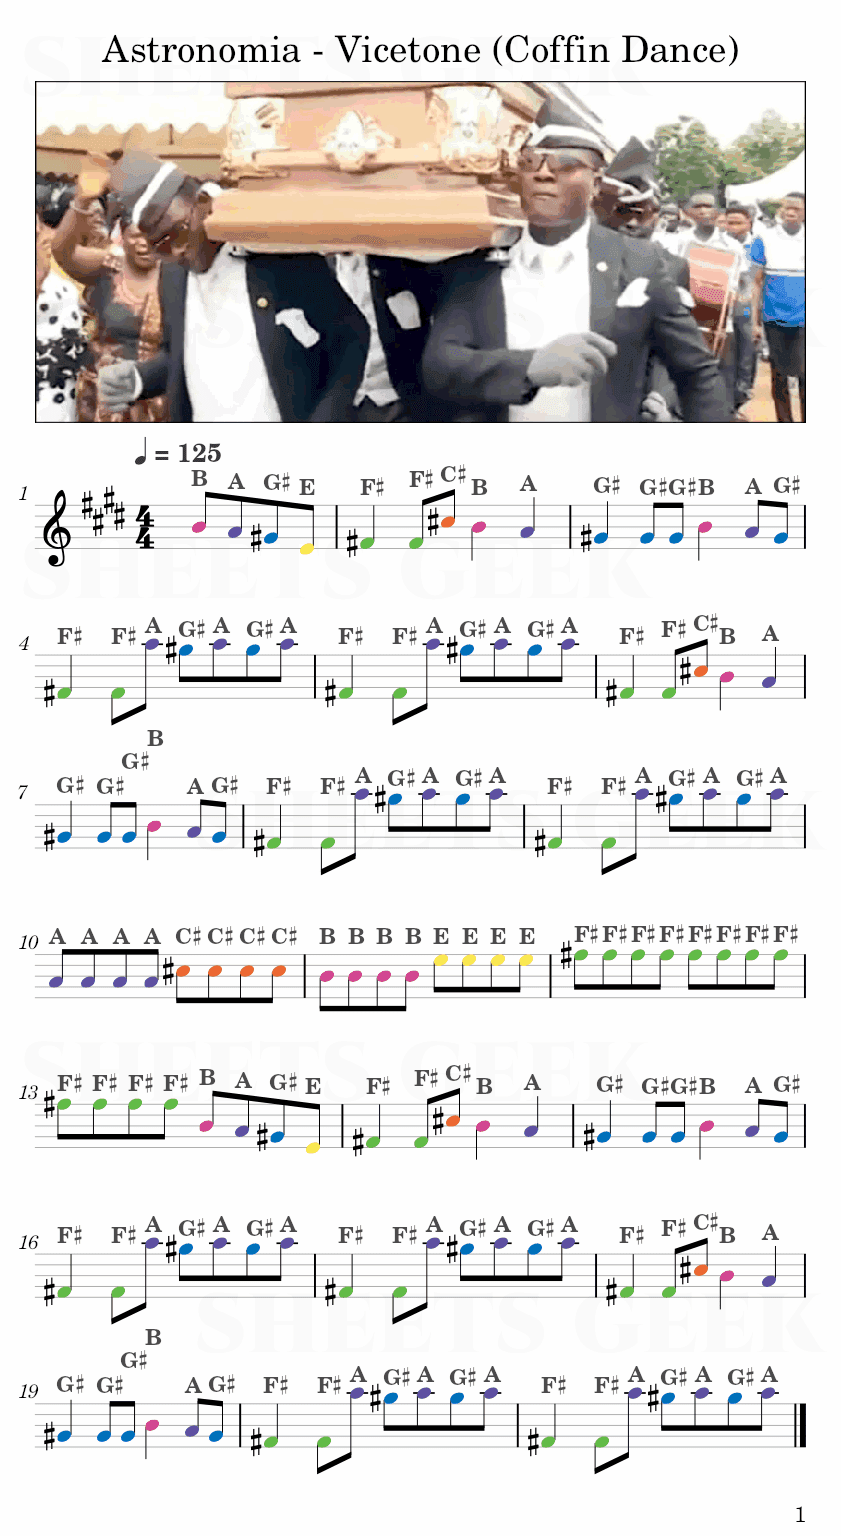 Astronomia - Vicetone (Coffin Dance) Easy Sheet Music Free for piano, keyboard, flute, violin, sax, cello page 1